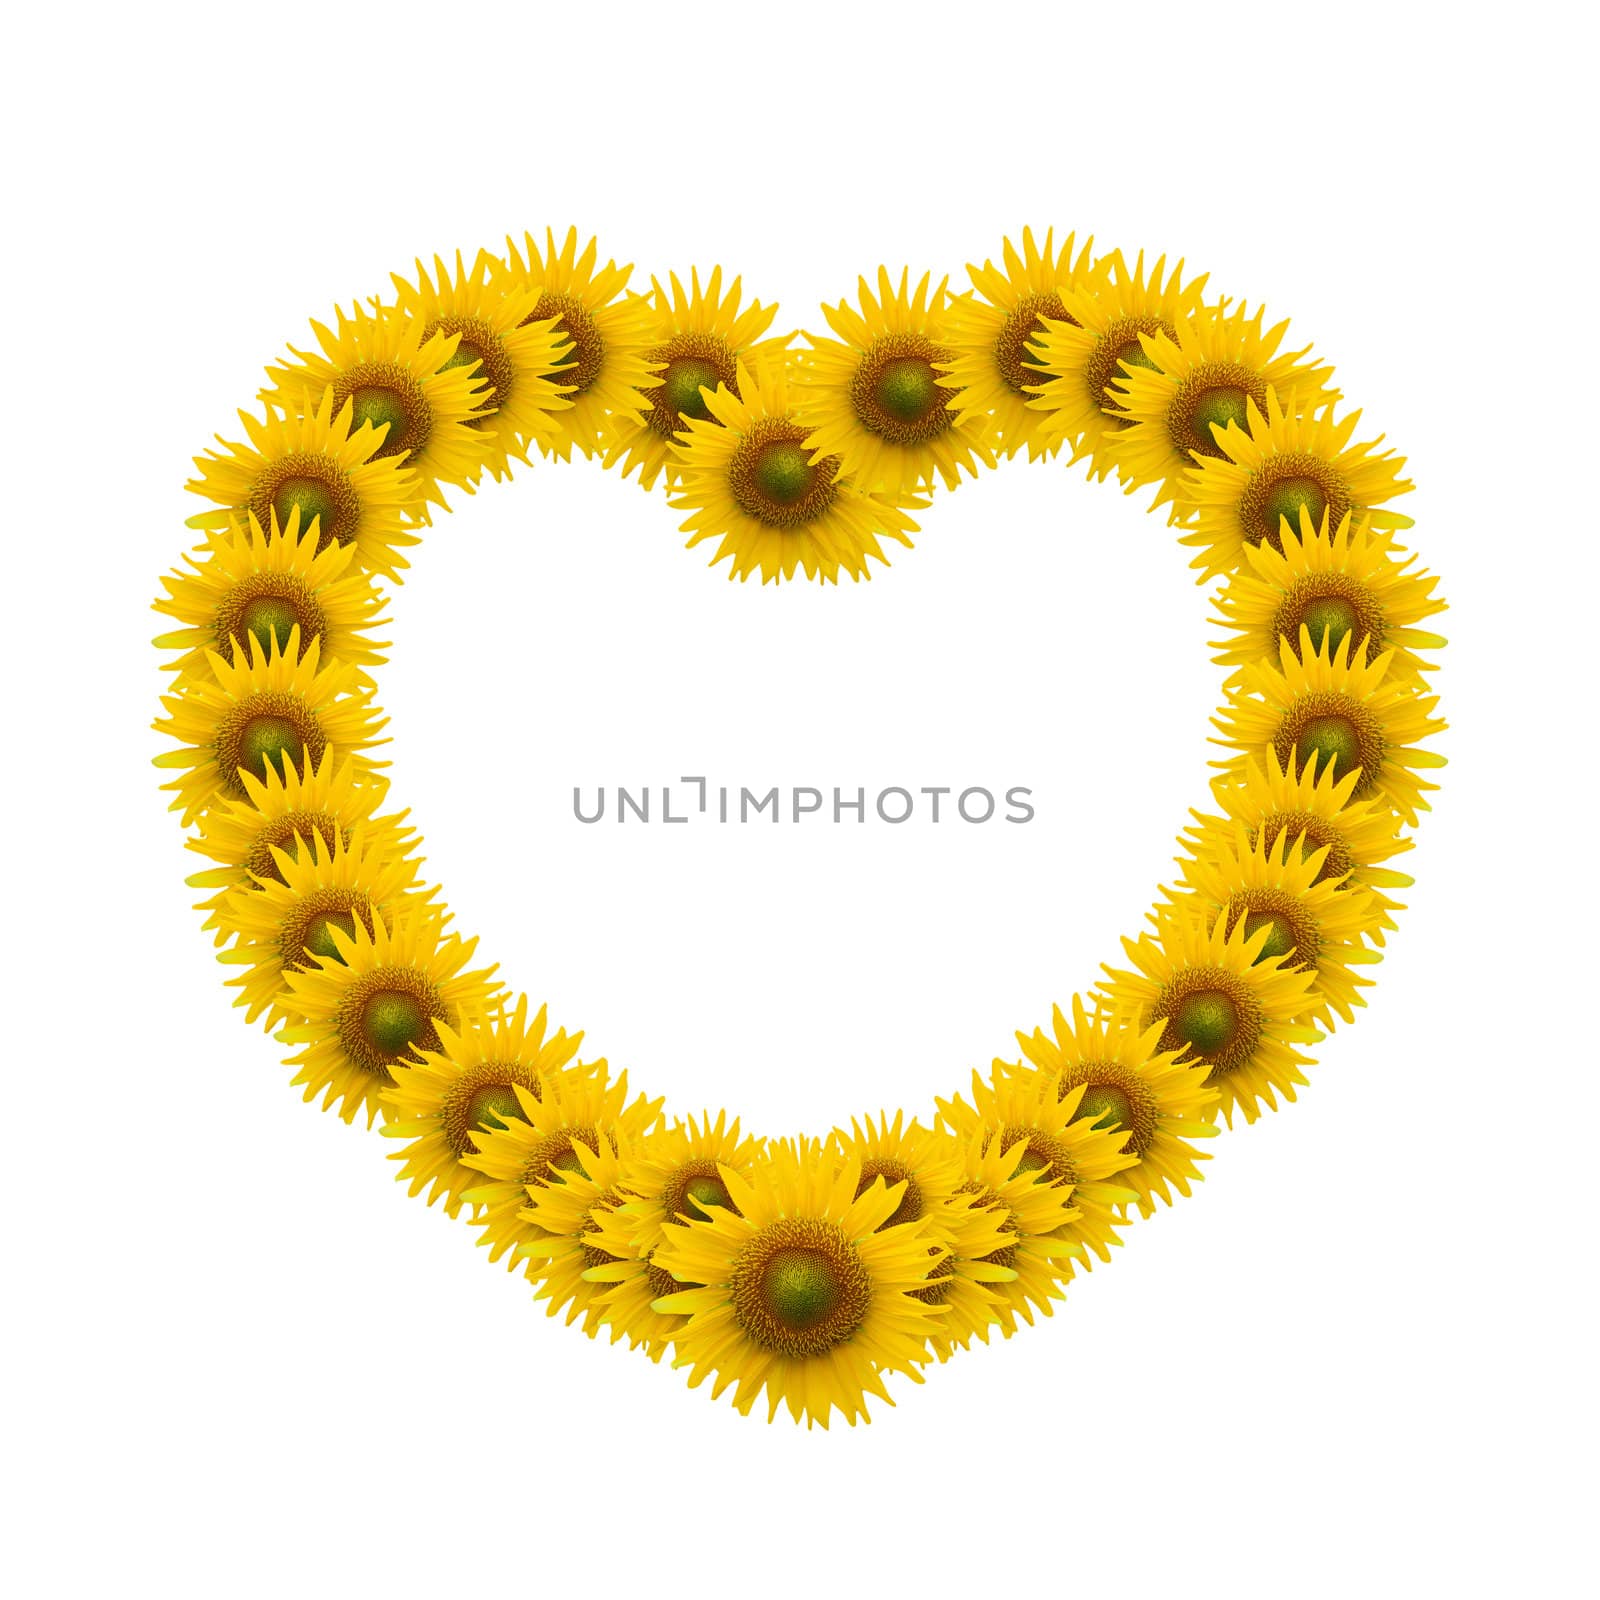 sunflower heart image isolate on white